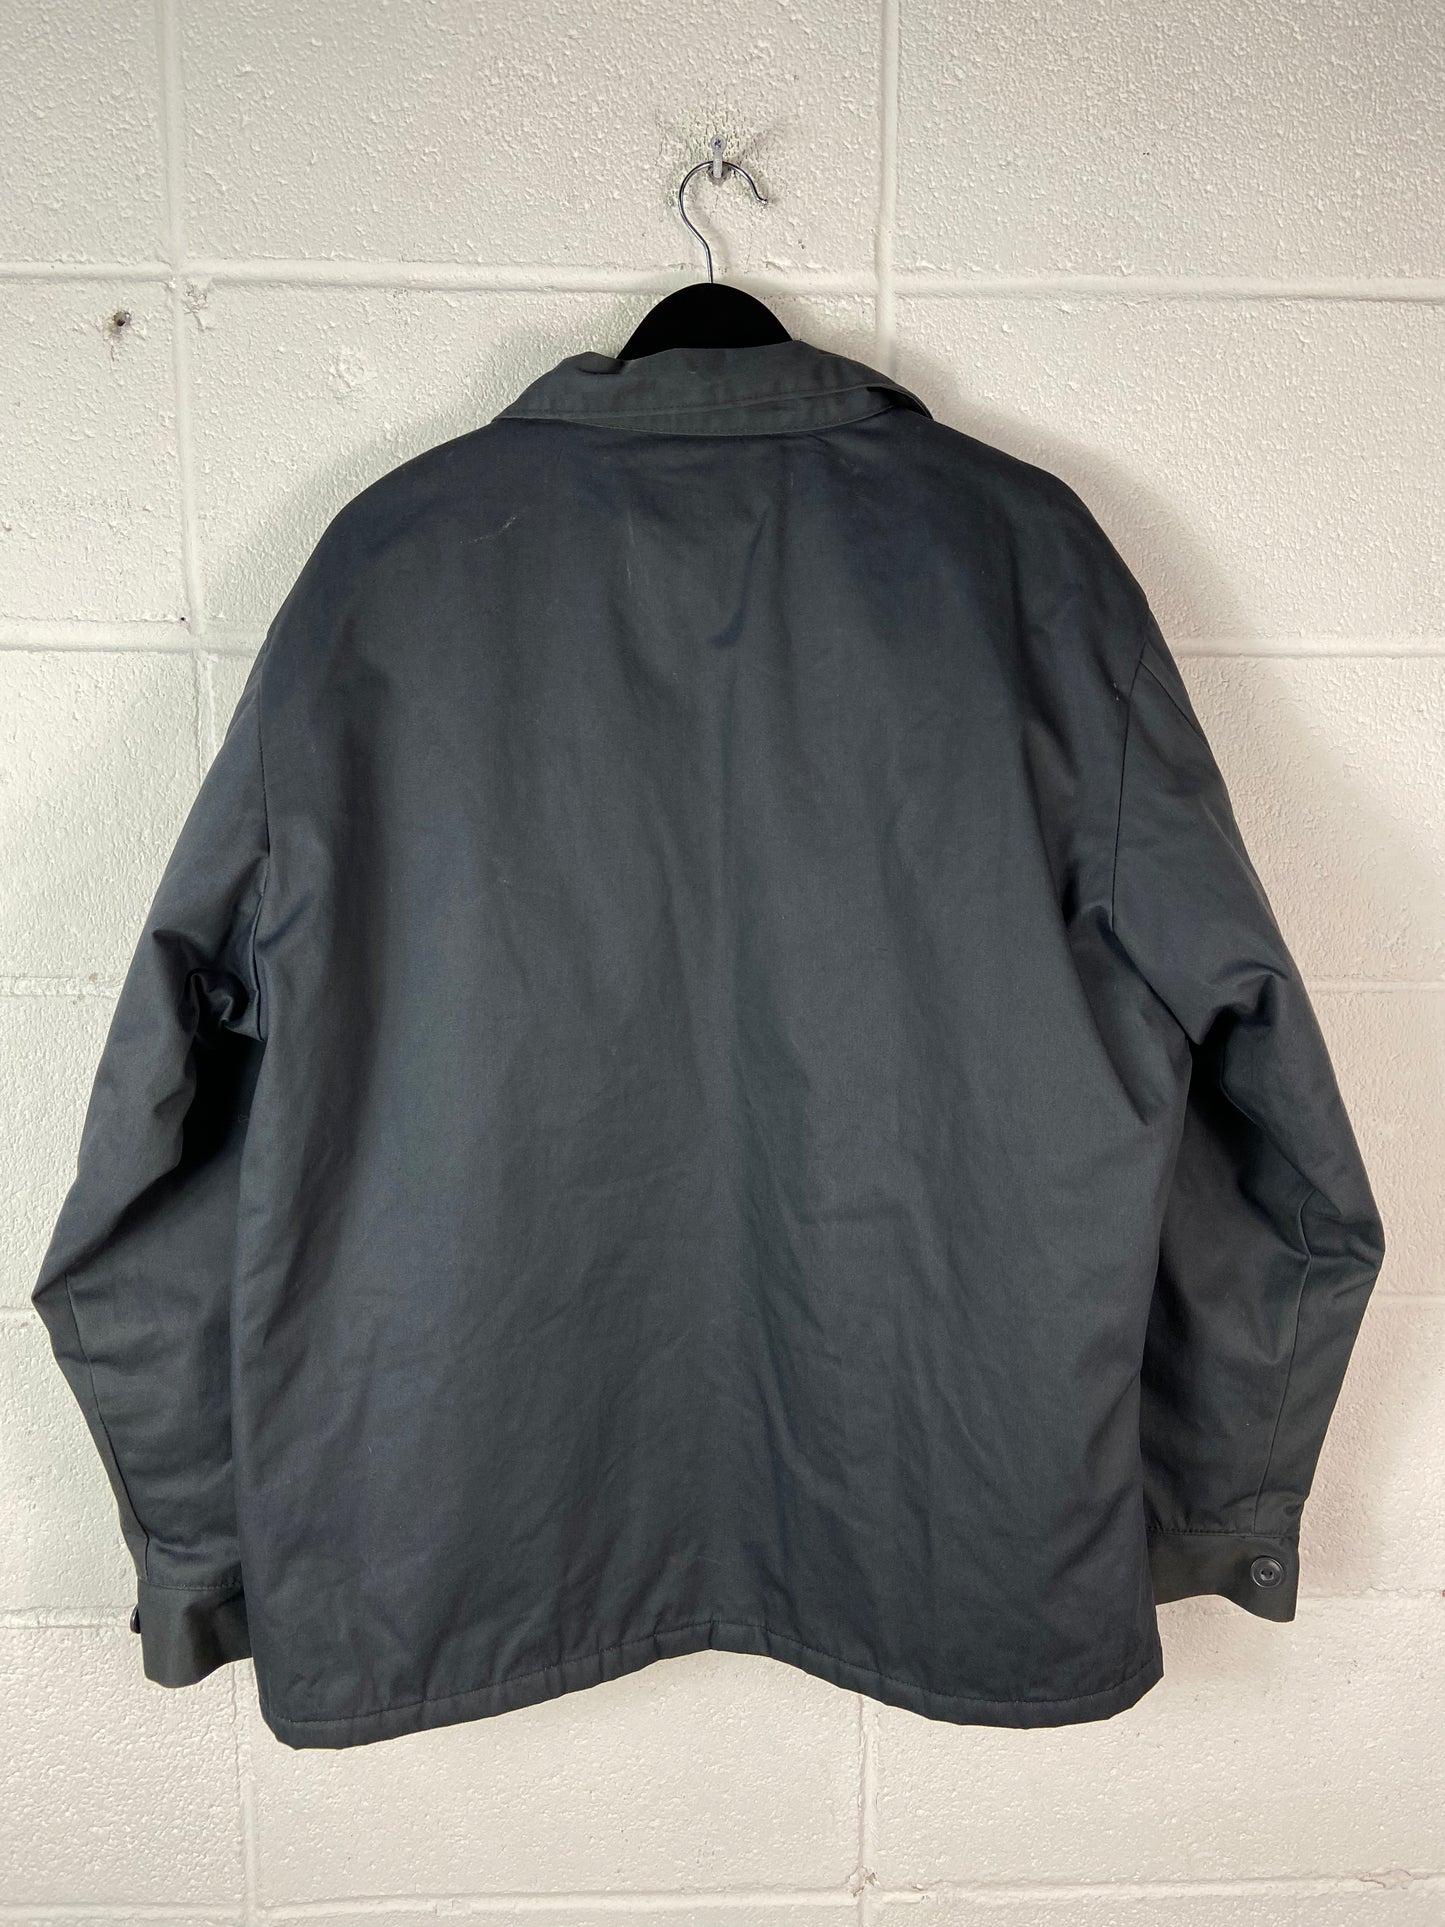 VTG Grey Quilted Work Jacket Sz XL